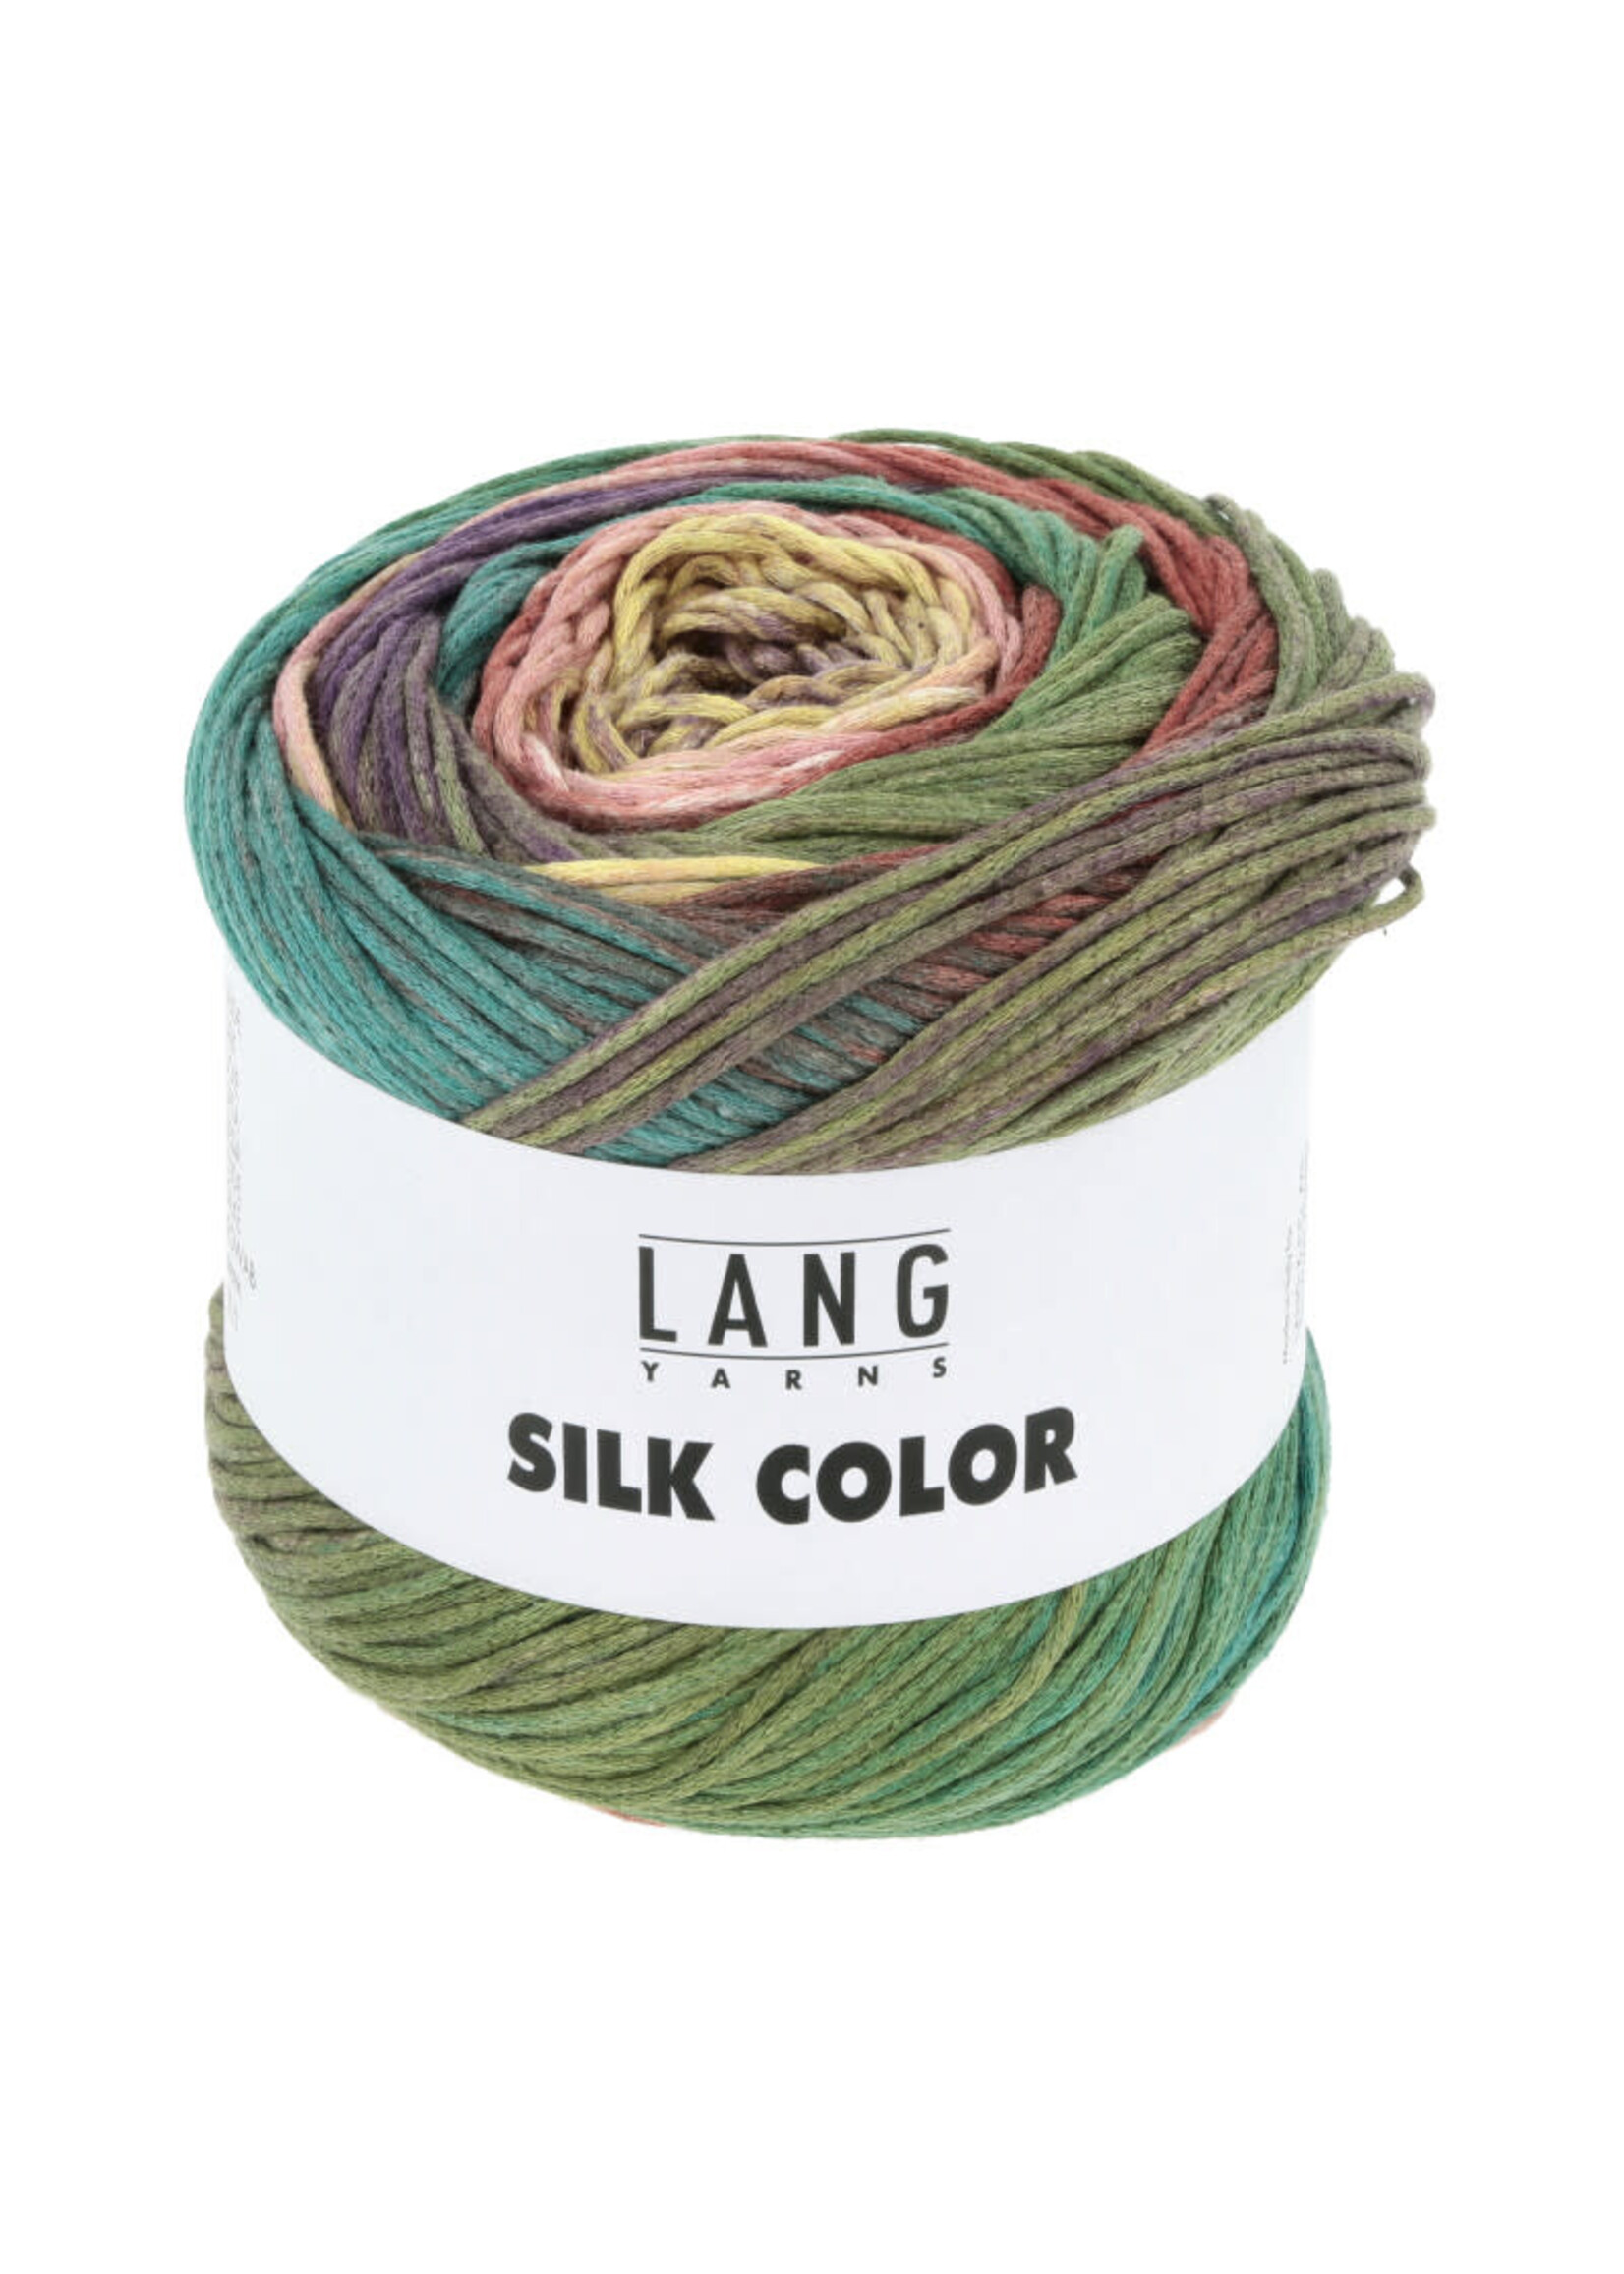 LangYarns Silk Color - 0006 Lila/groen/zalm